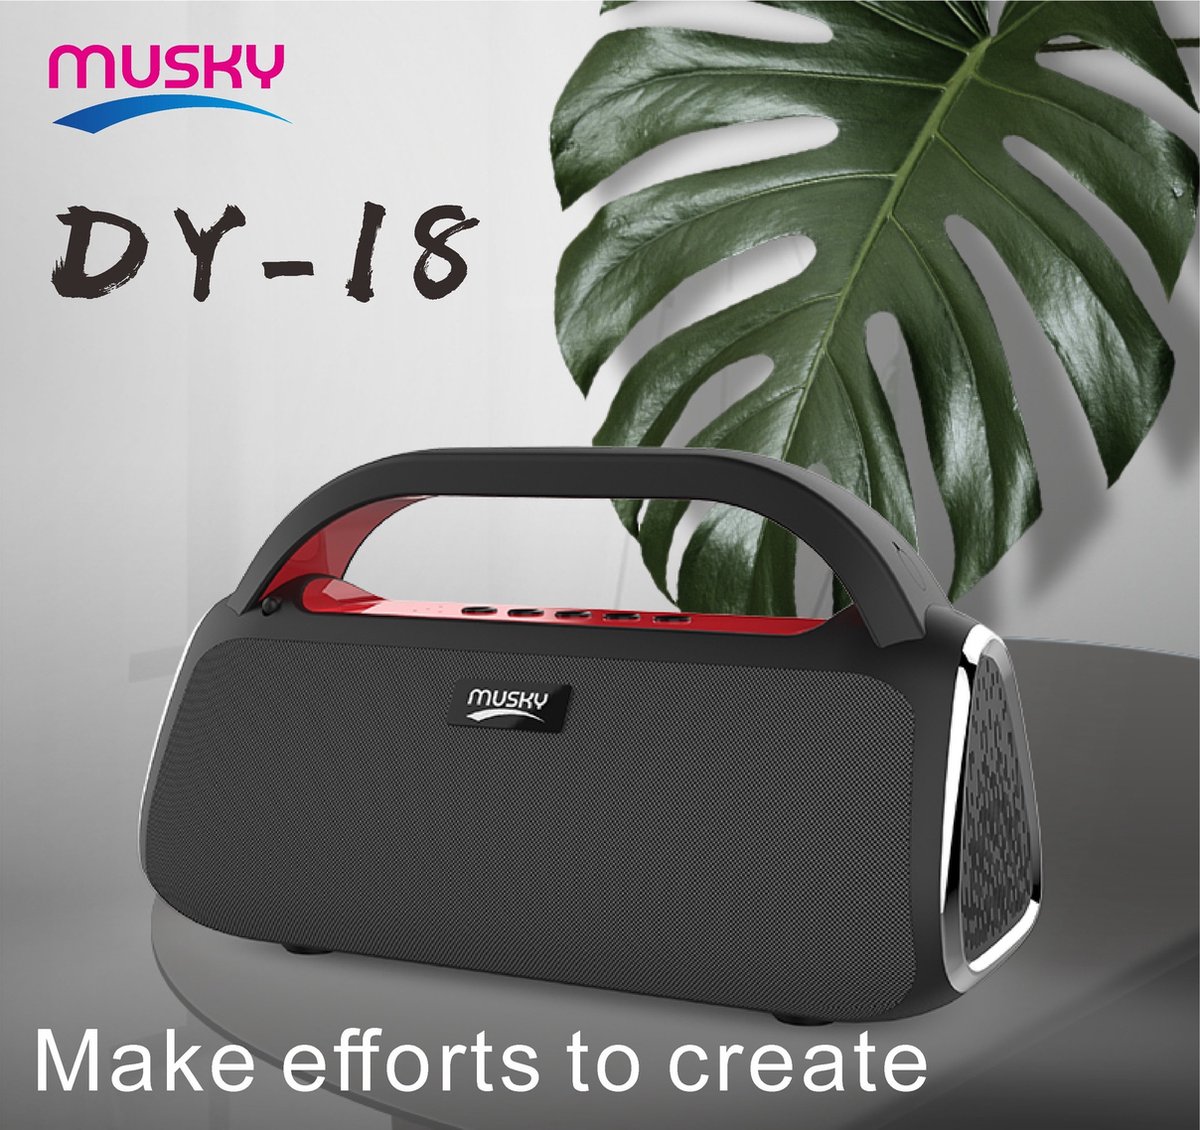 Musky Bluetooth Speaker DY-18 Rood